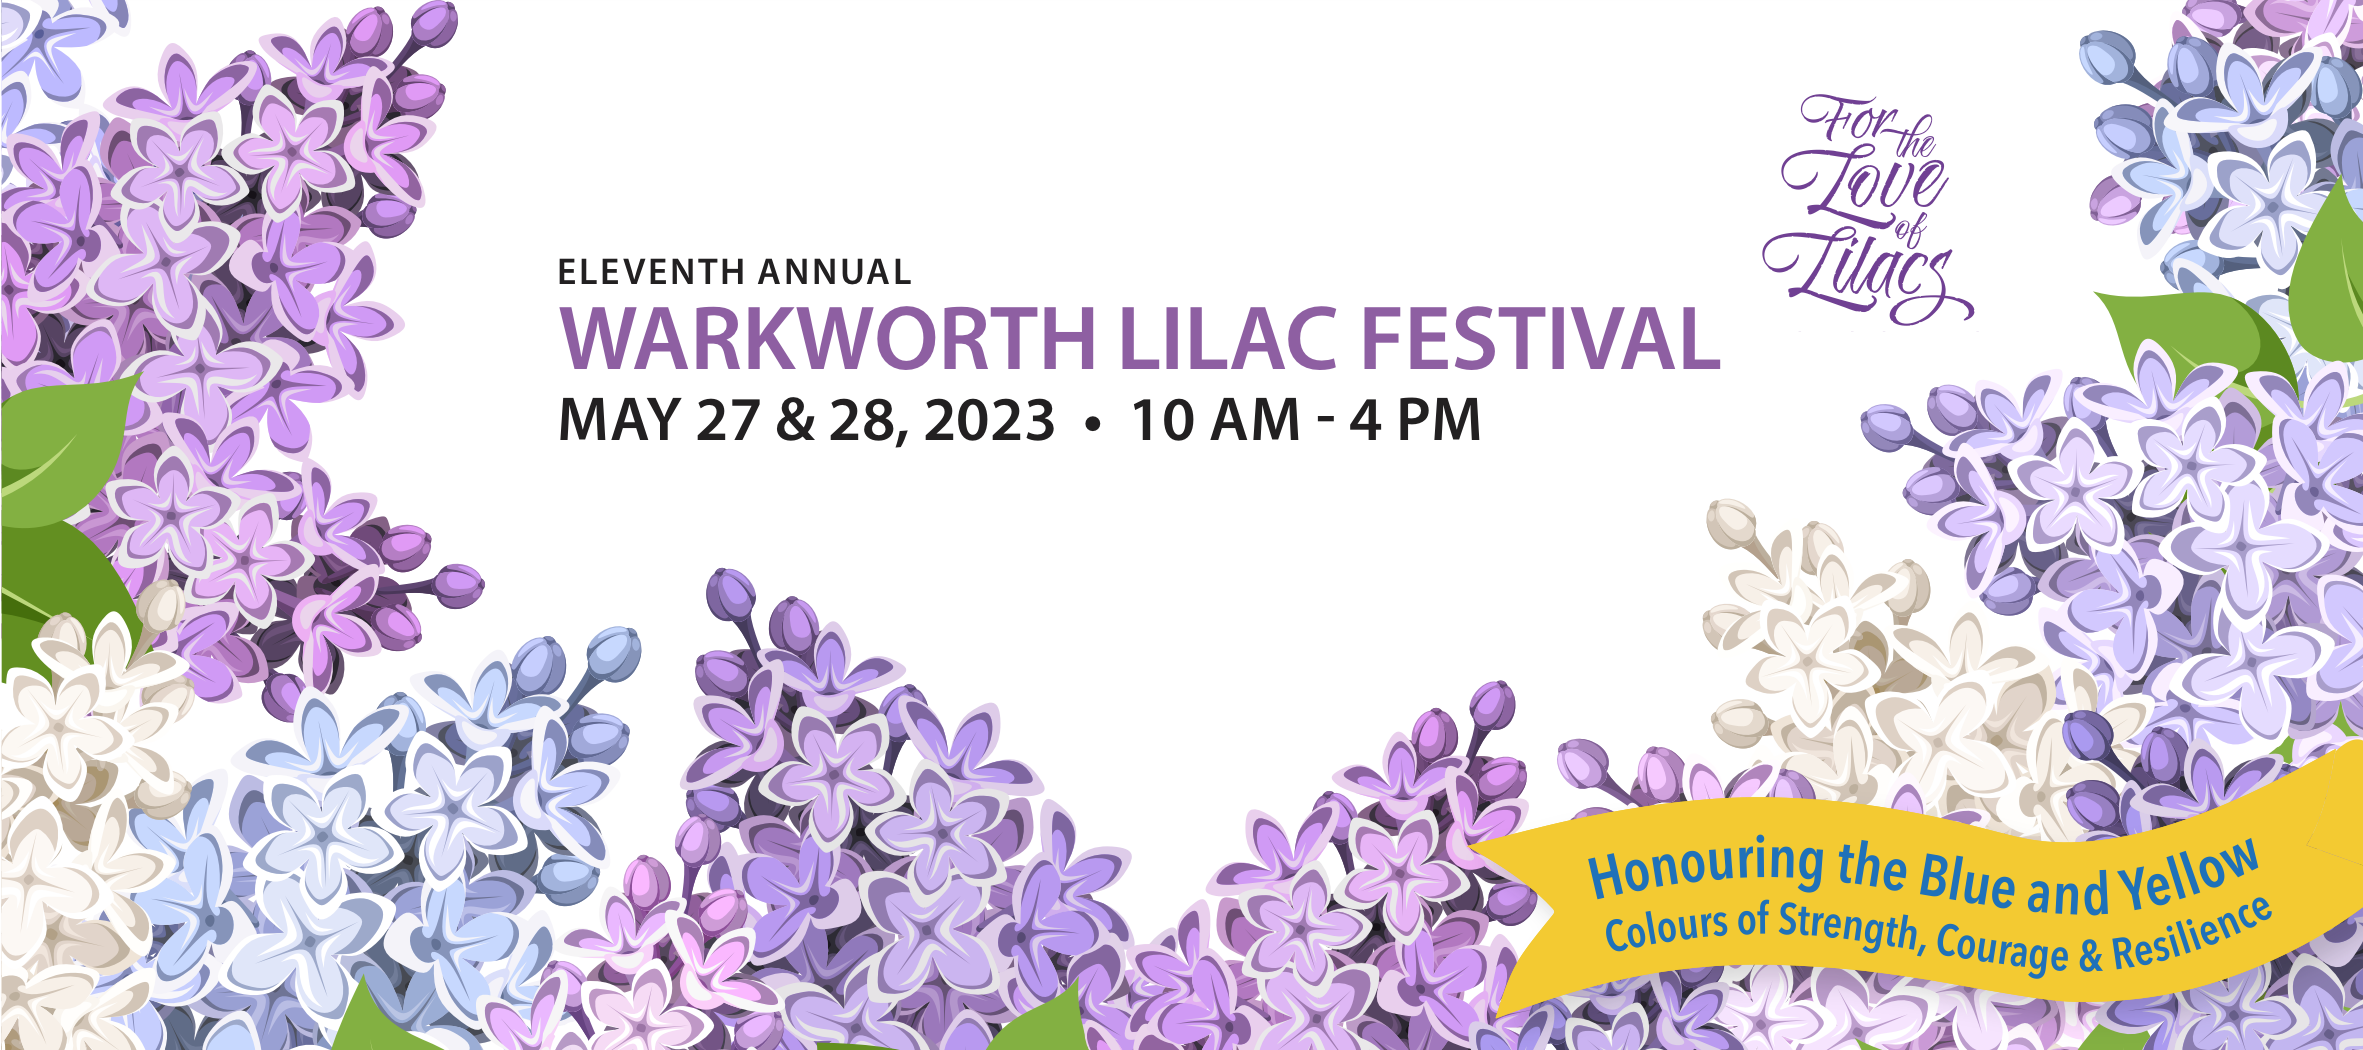 Warkworth Lilac Festival May 27 & 28, 2023